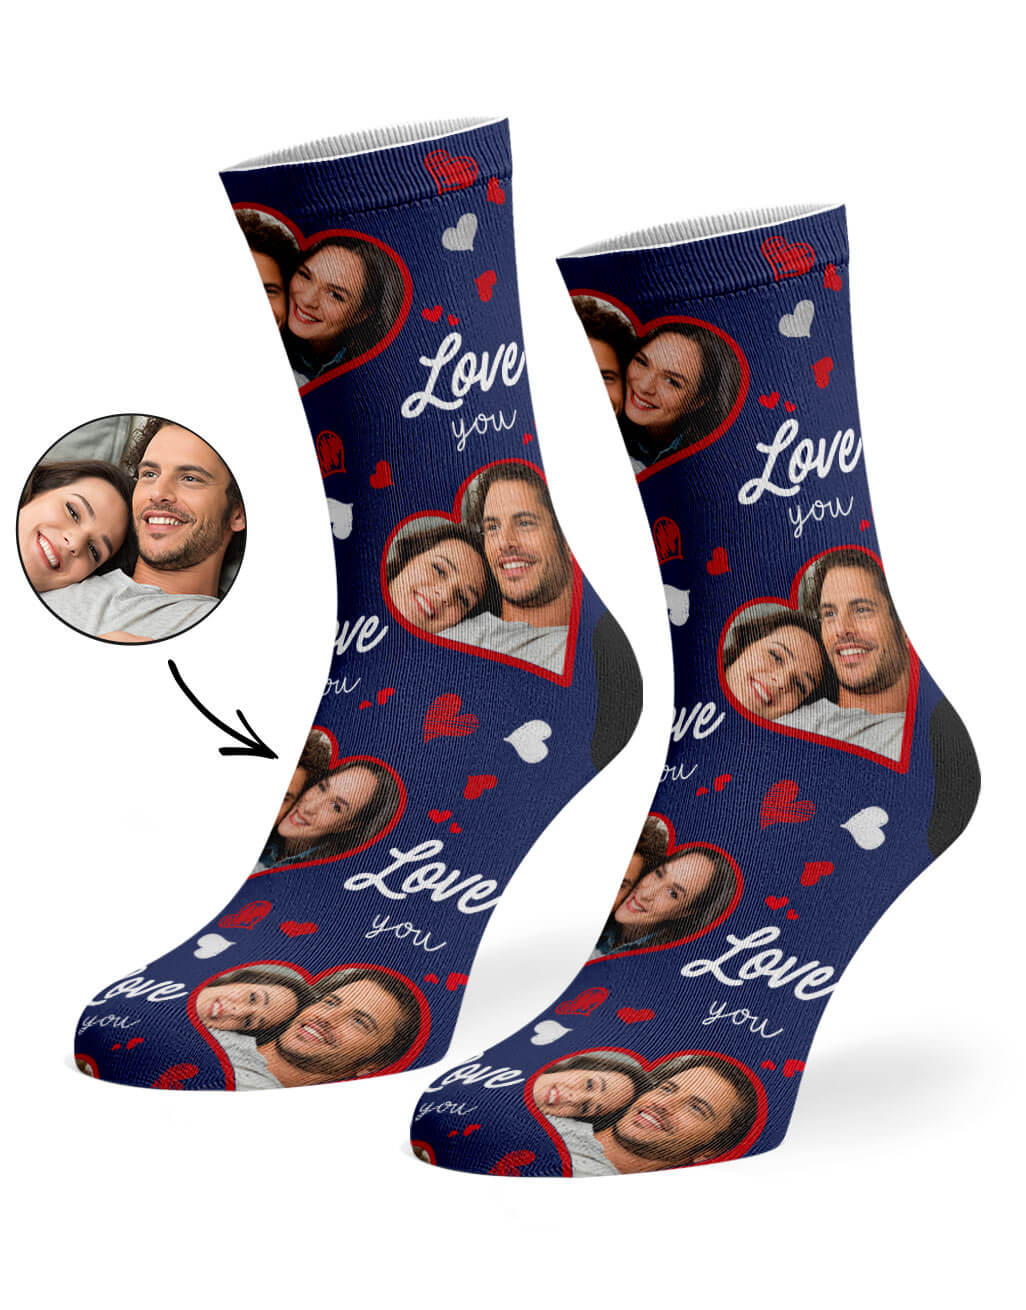 Heart Photo Collage Custom Socks